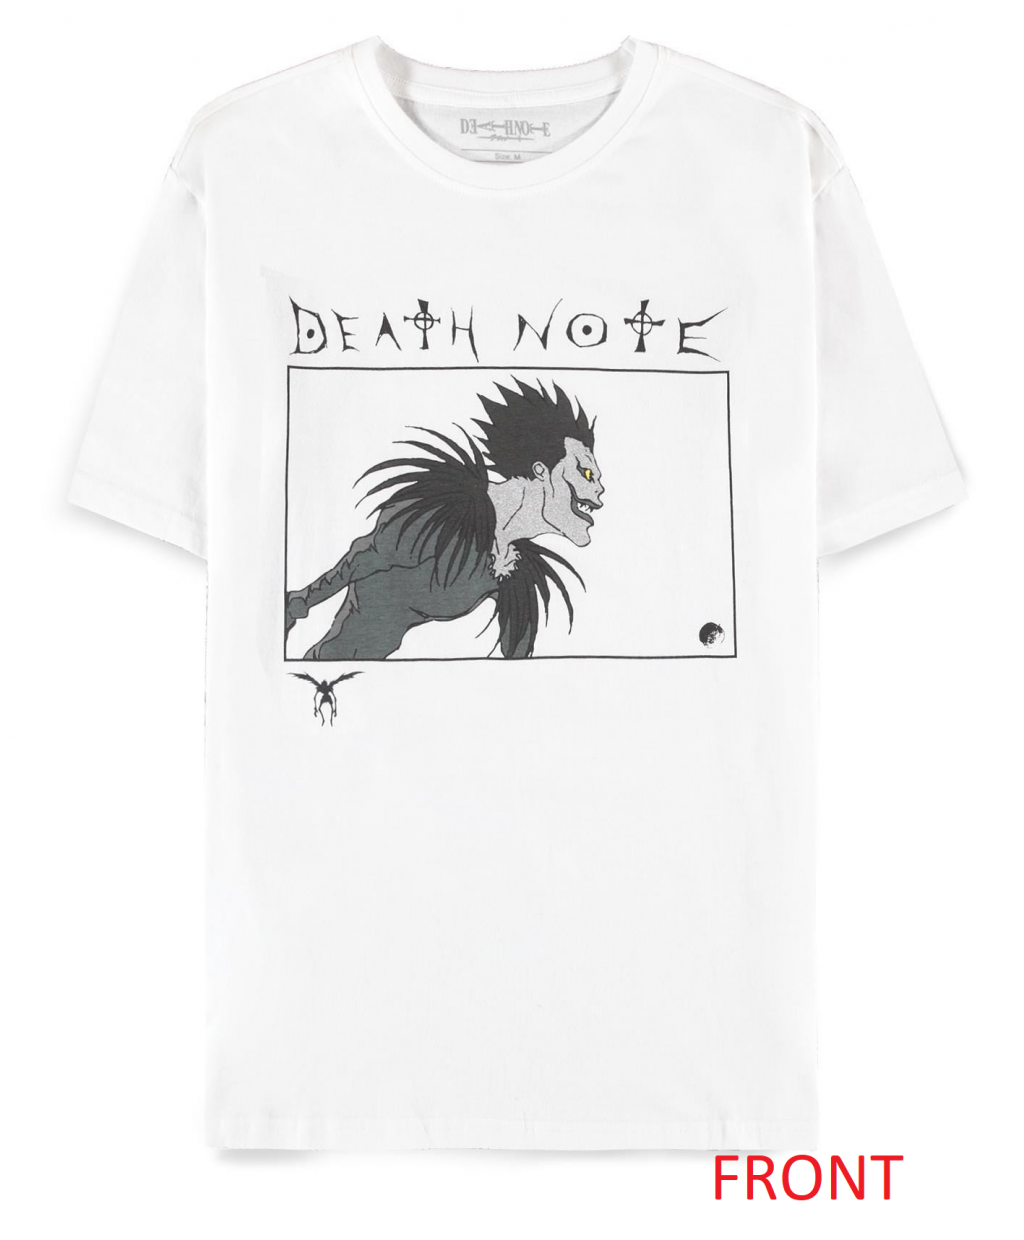 DEATH NOTE - Ryuk Square - Men's White T-Shirt (S)